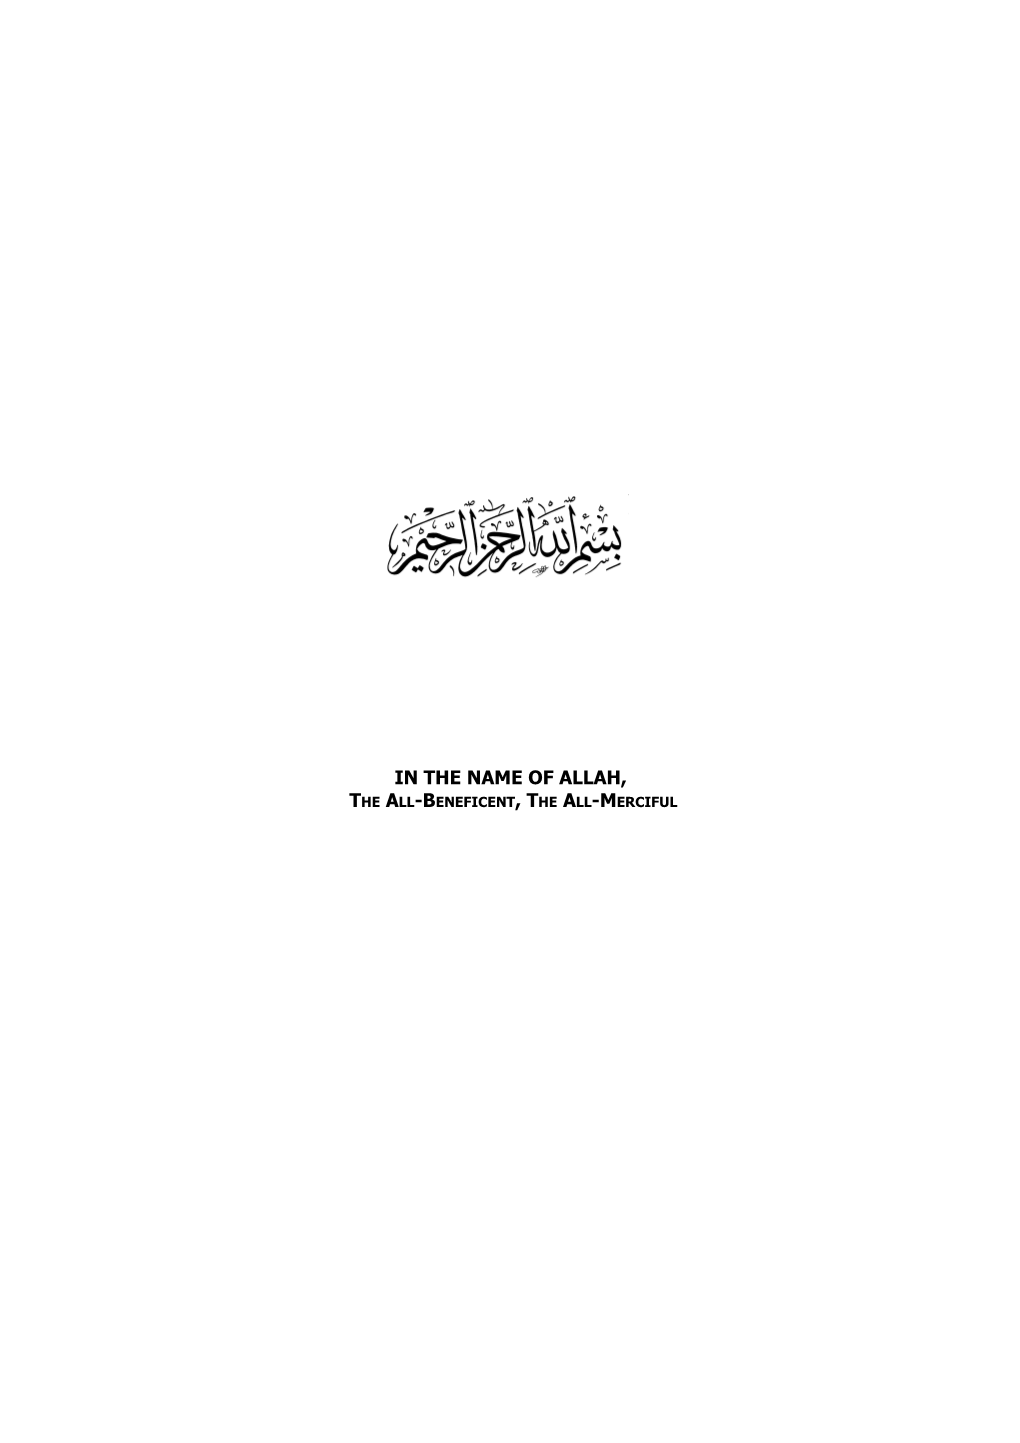 The Qur'an As Reflected in Nahj Al-Balaghah